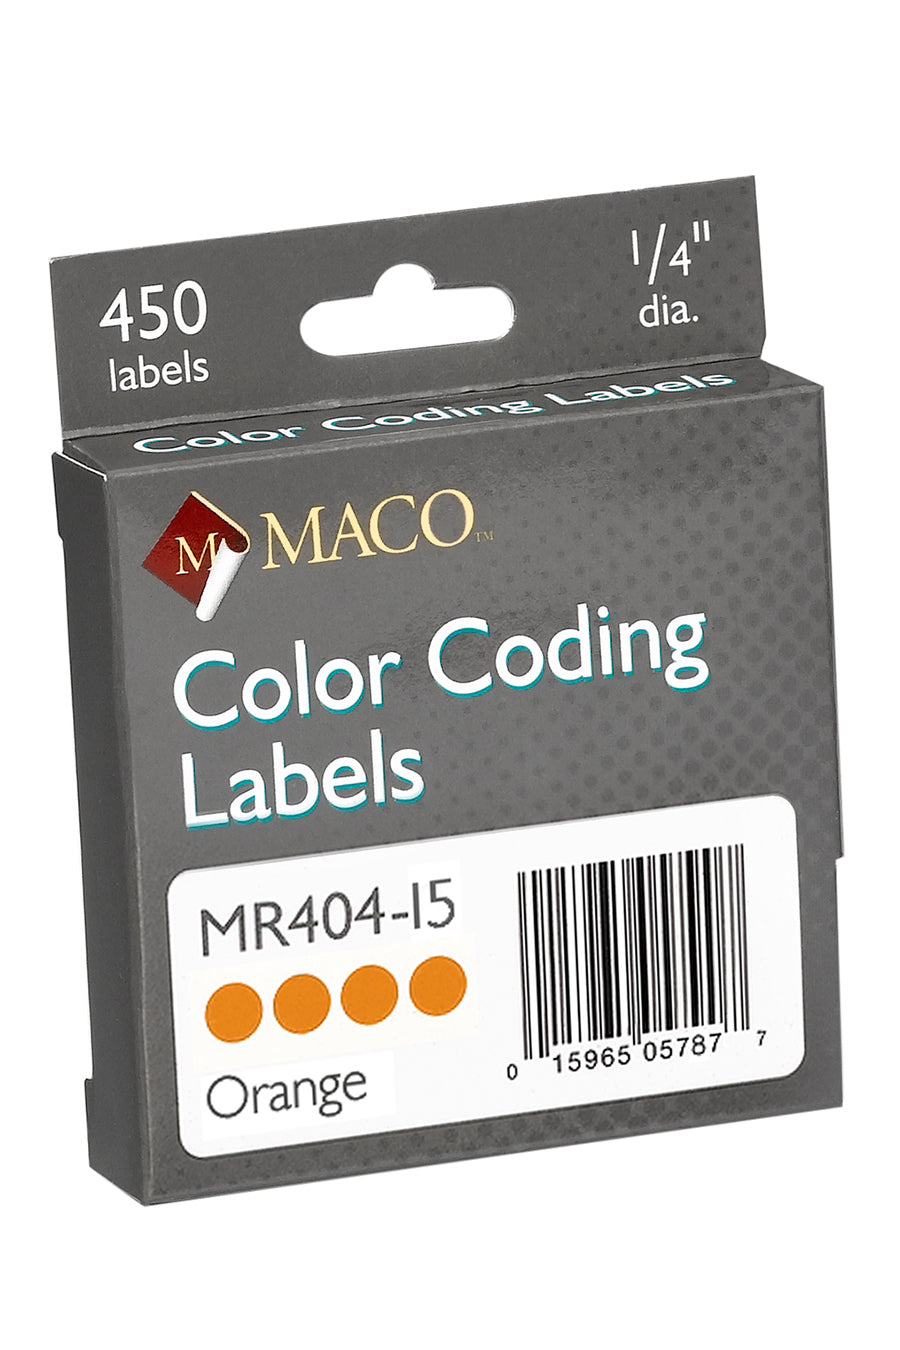 1/4" Dia. Color Coding Labels, Orange, 450/On Roll in Dispenser Box